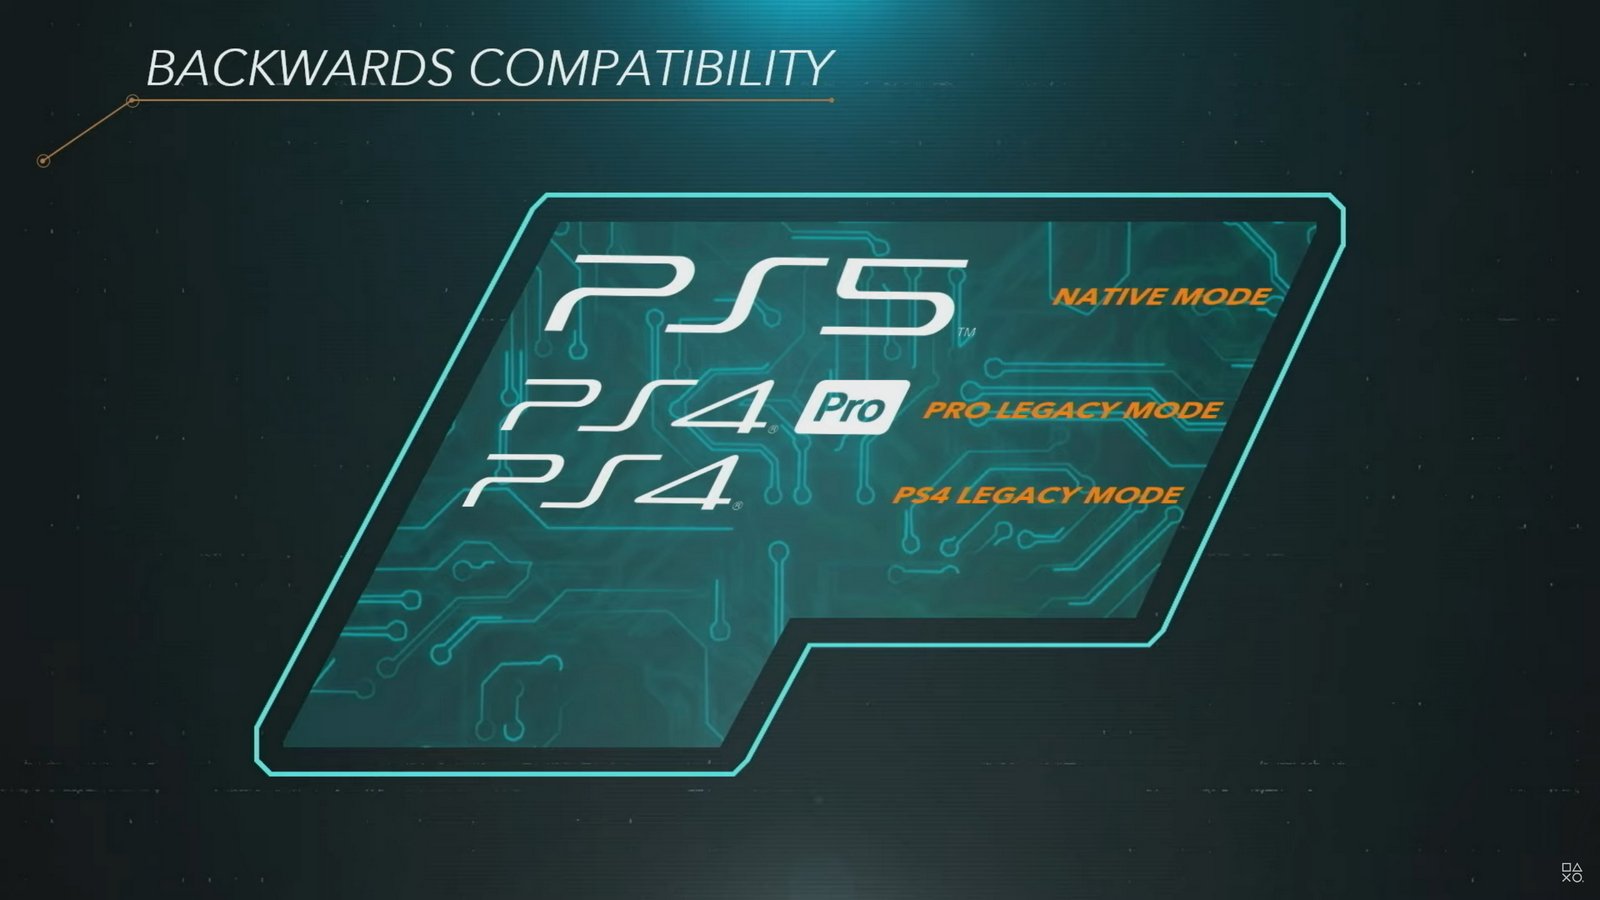 Sony Clarifies PS5 Backwards Compatibility, Says